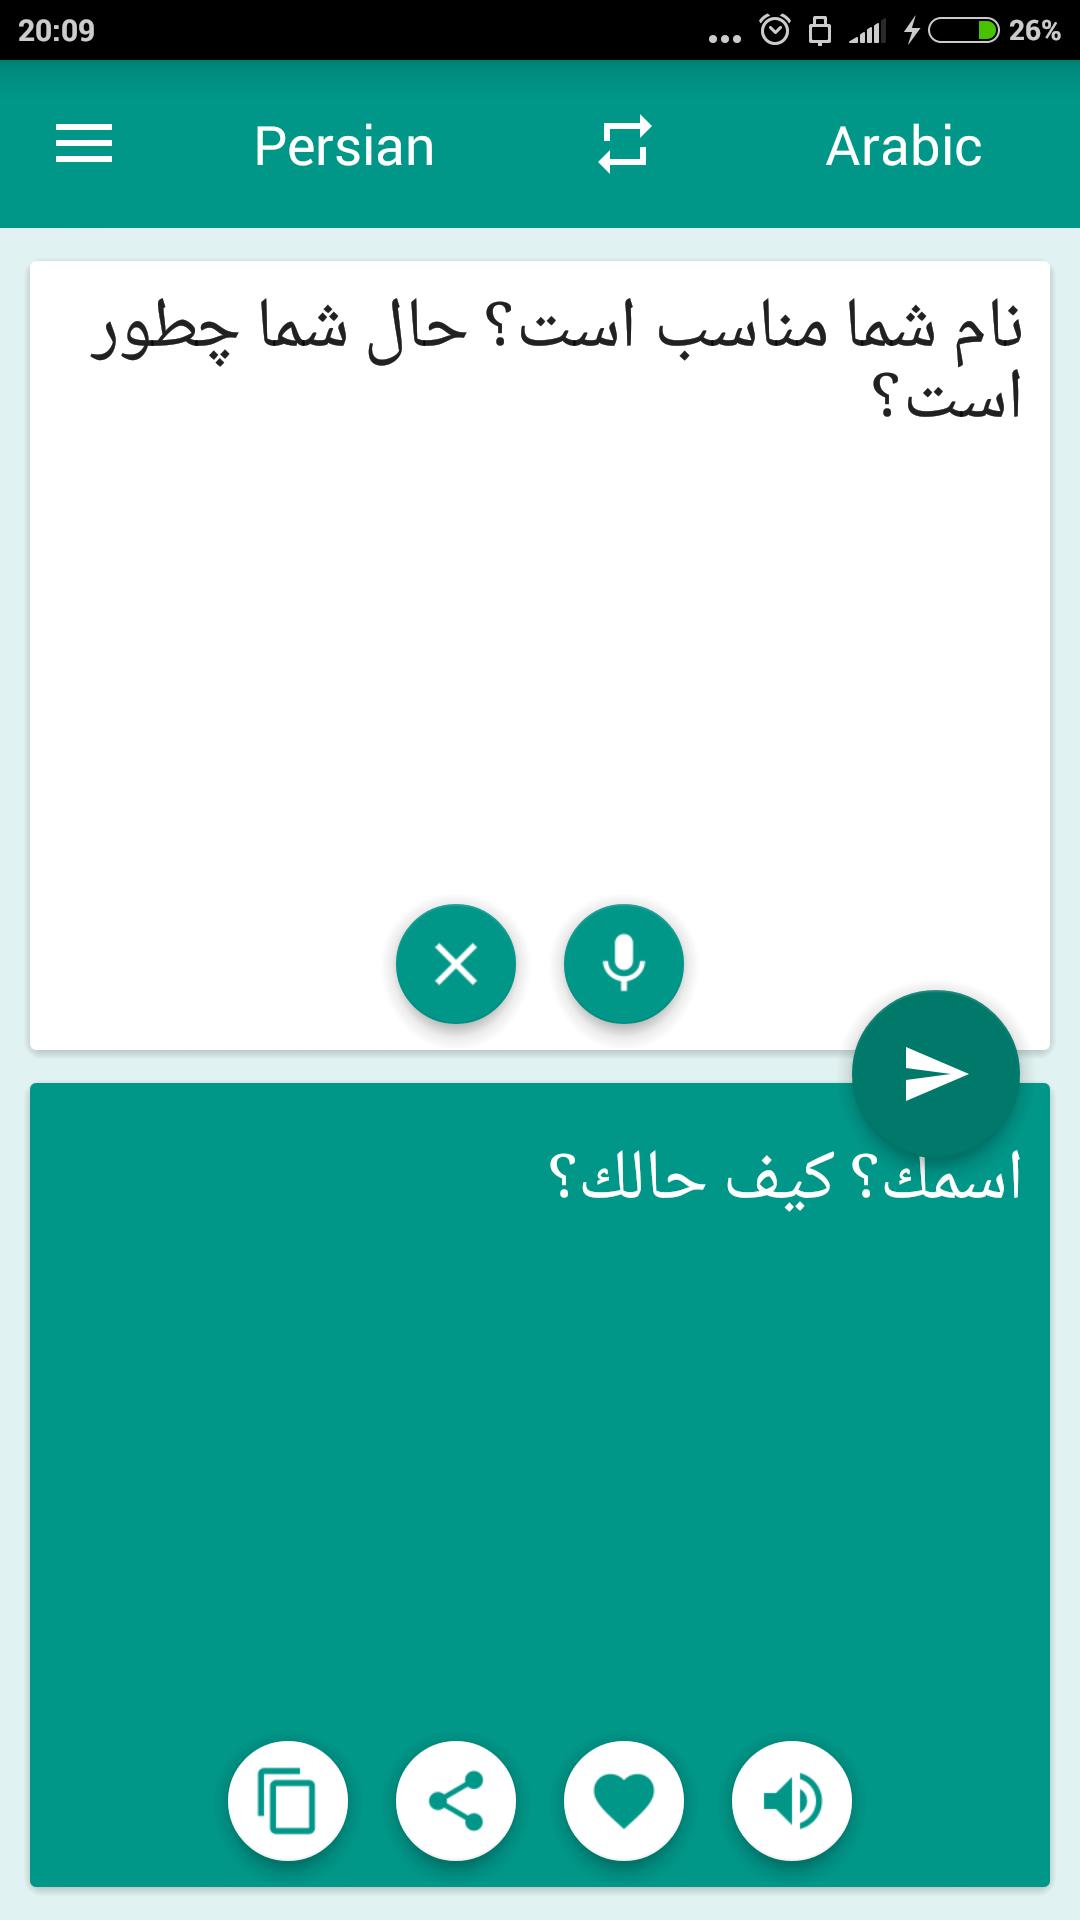 المترجم عربي-فارسي for Android - APK Download